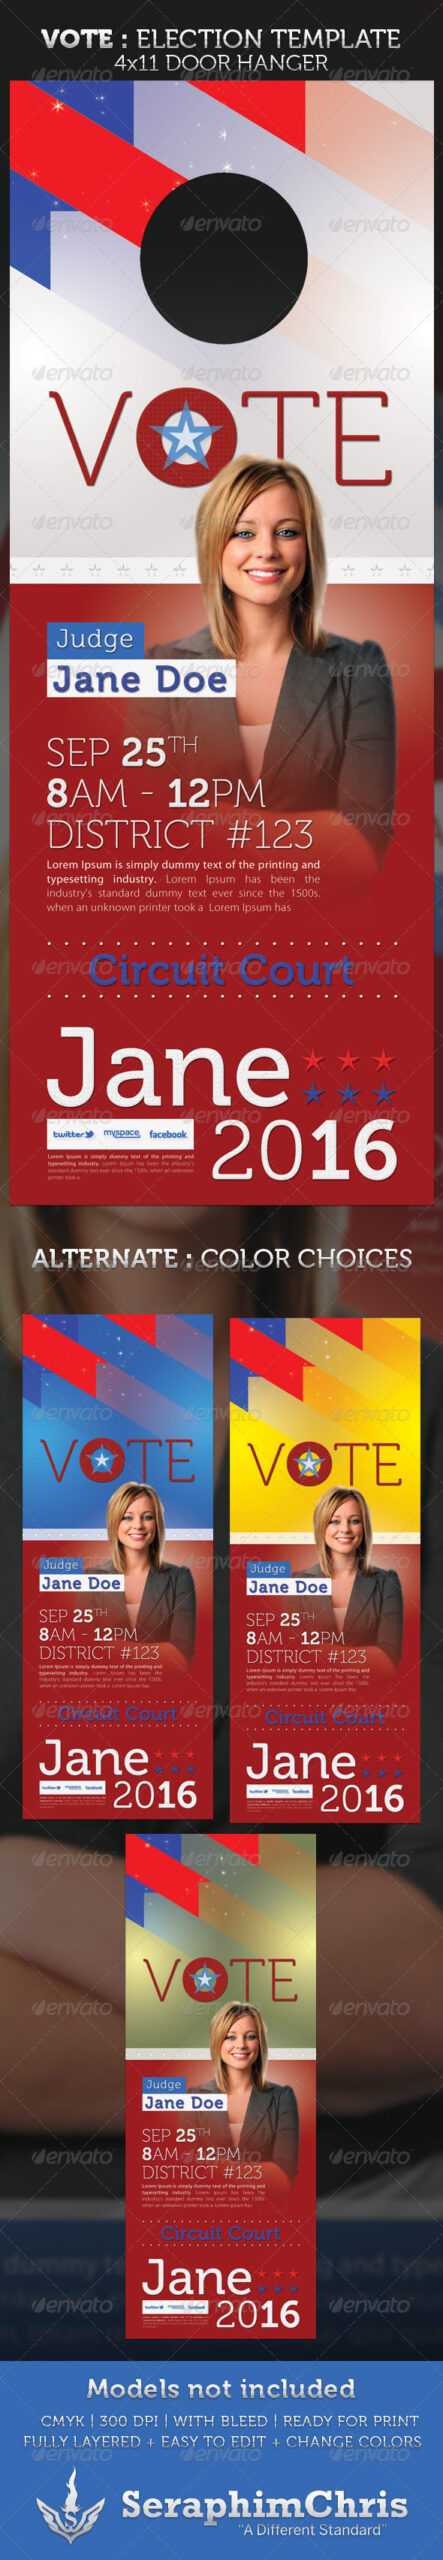 Election Flyer Templates Graphics, Designs & Templates For Election Flyers Templates Free